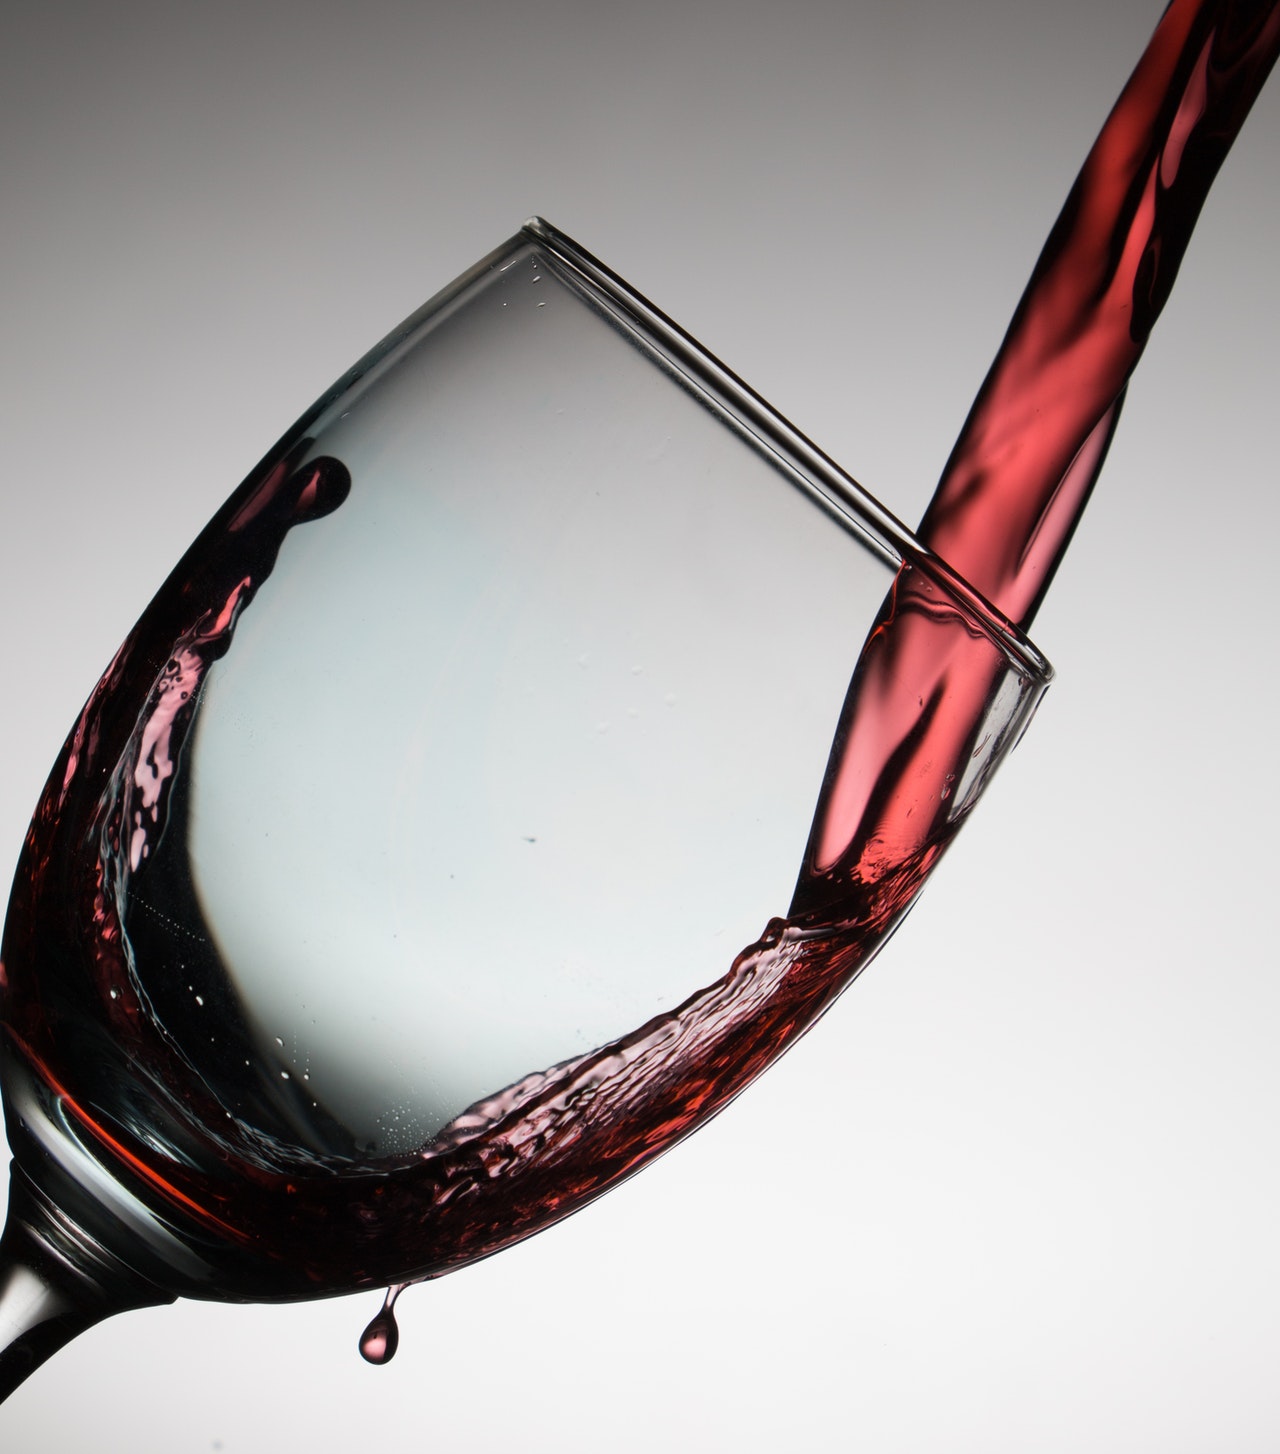 https://www.sciend.com/wp-content/uploads/2013/10/red-wine-glass.jpg